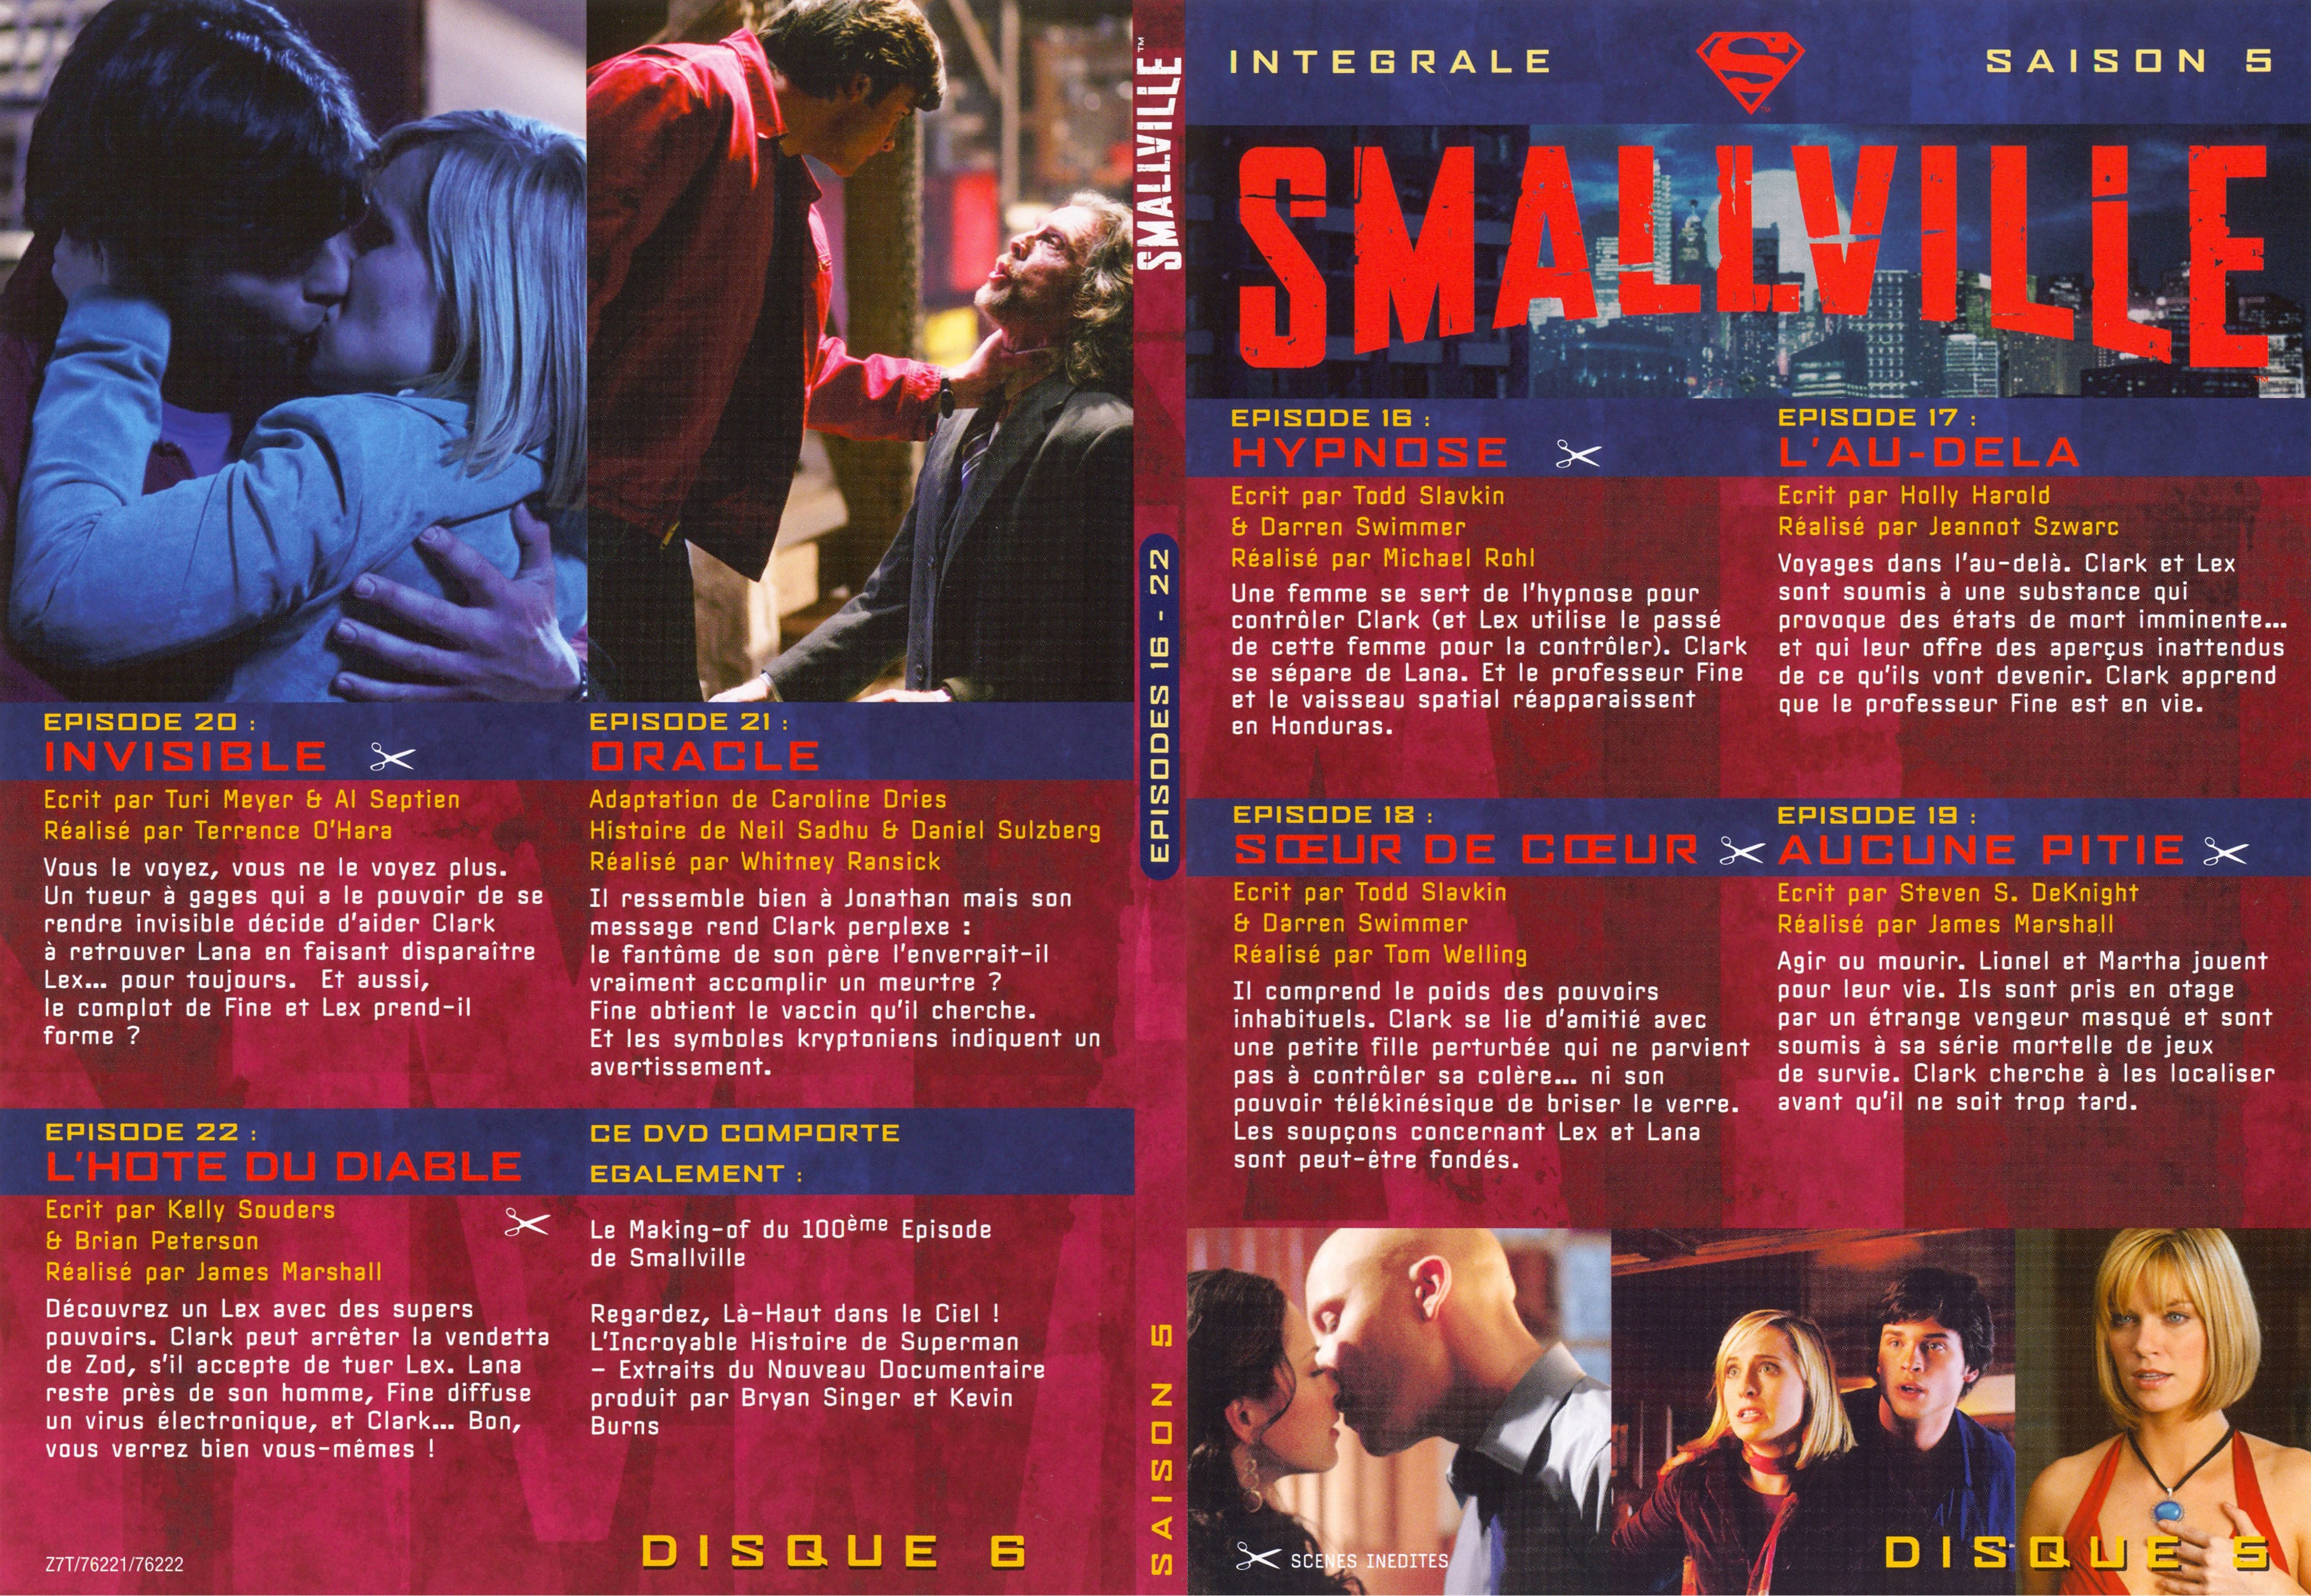 Jaquette DVD Smallville saison 5 DVD 3